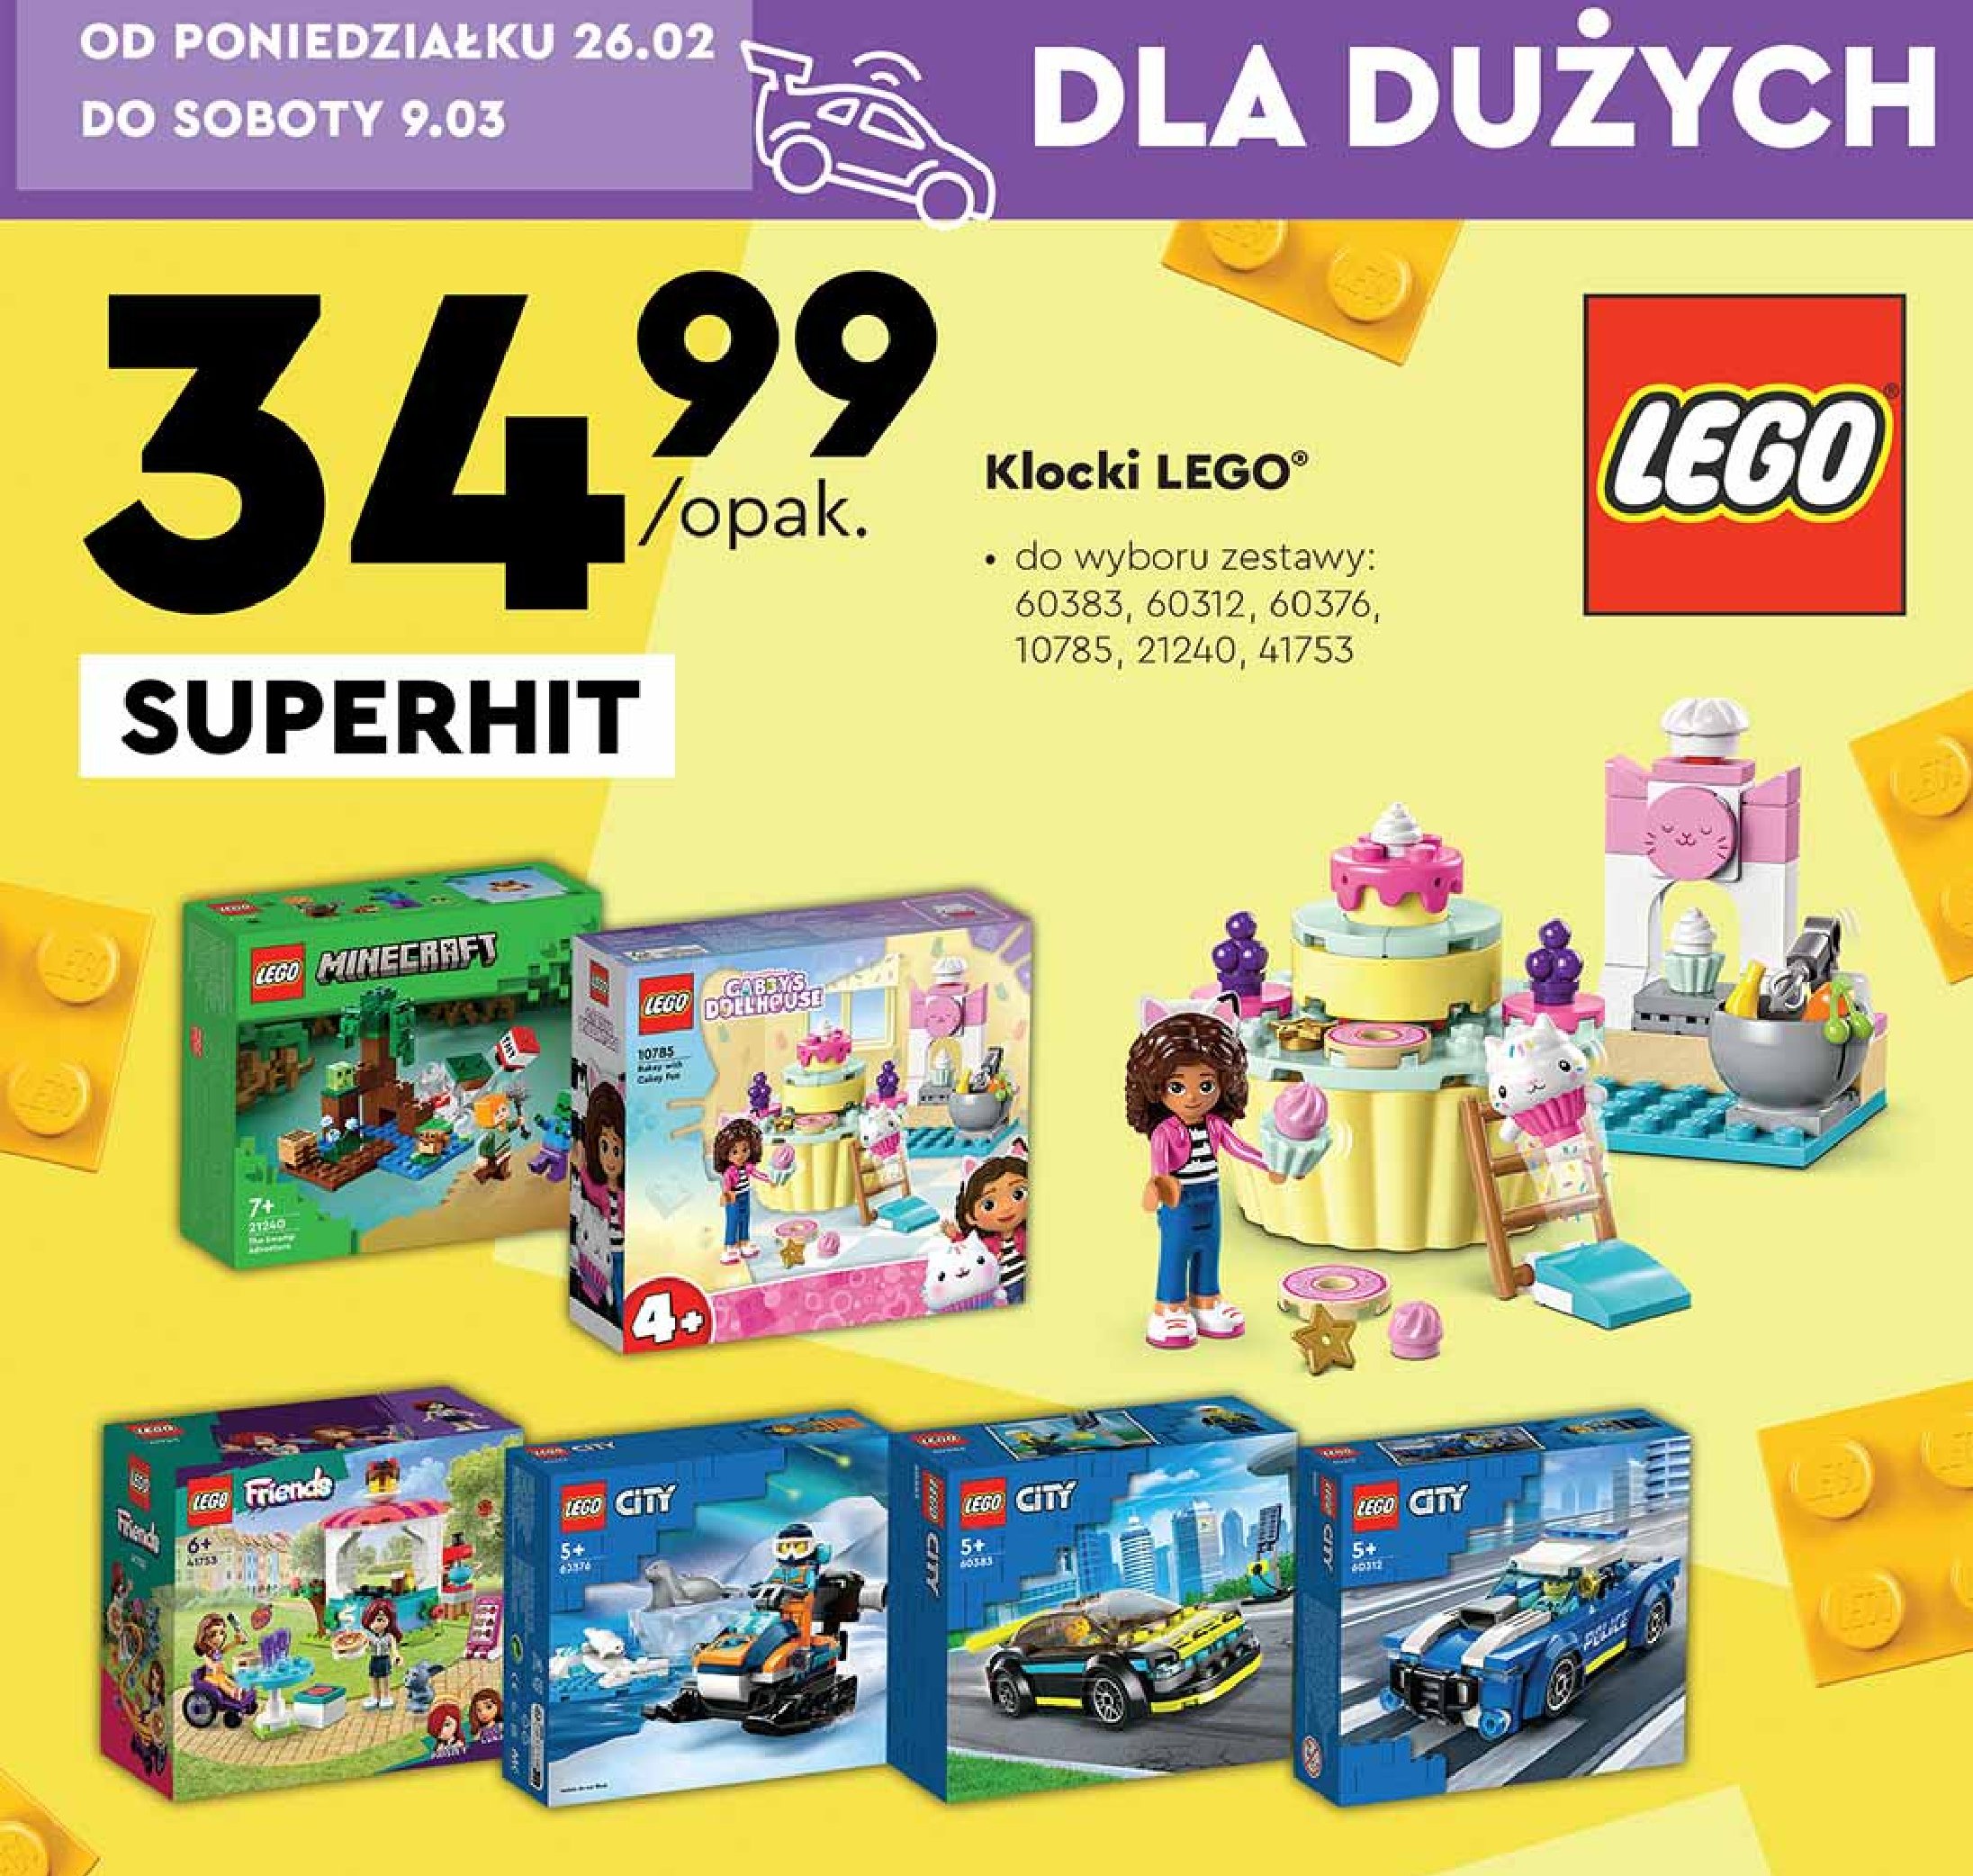 Klocki 60376 Lego city promocja